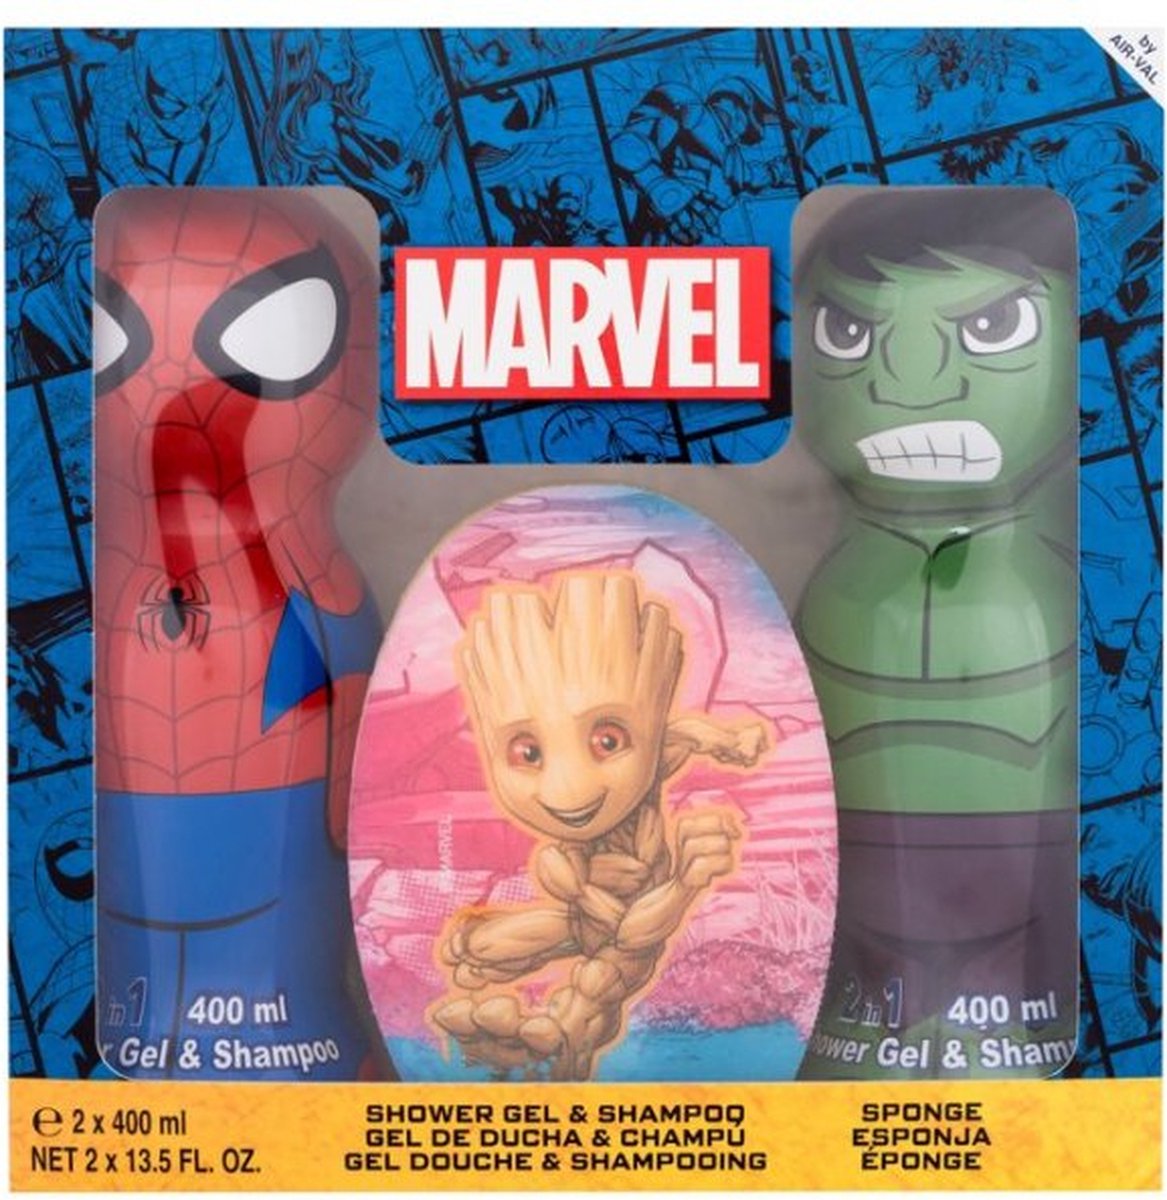 Marvel set Spider-Man & Hulk - Gel 400ml & Shampoo 400 ml + marvel groot spons - Spider-Man & Hulk